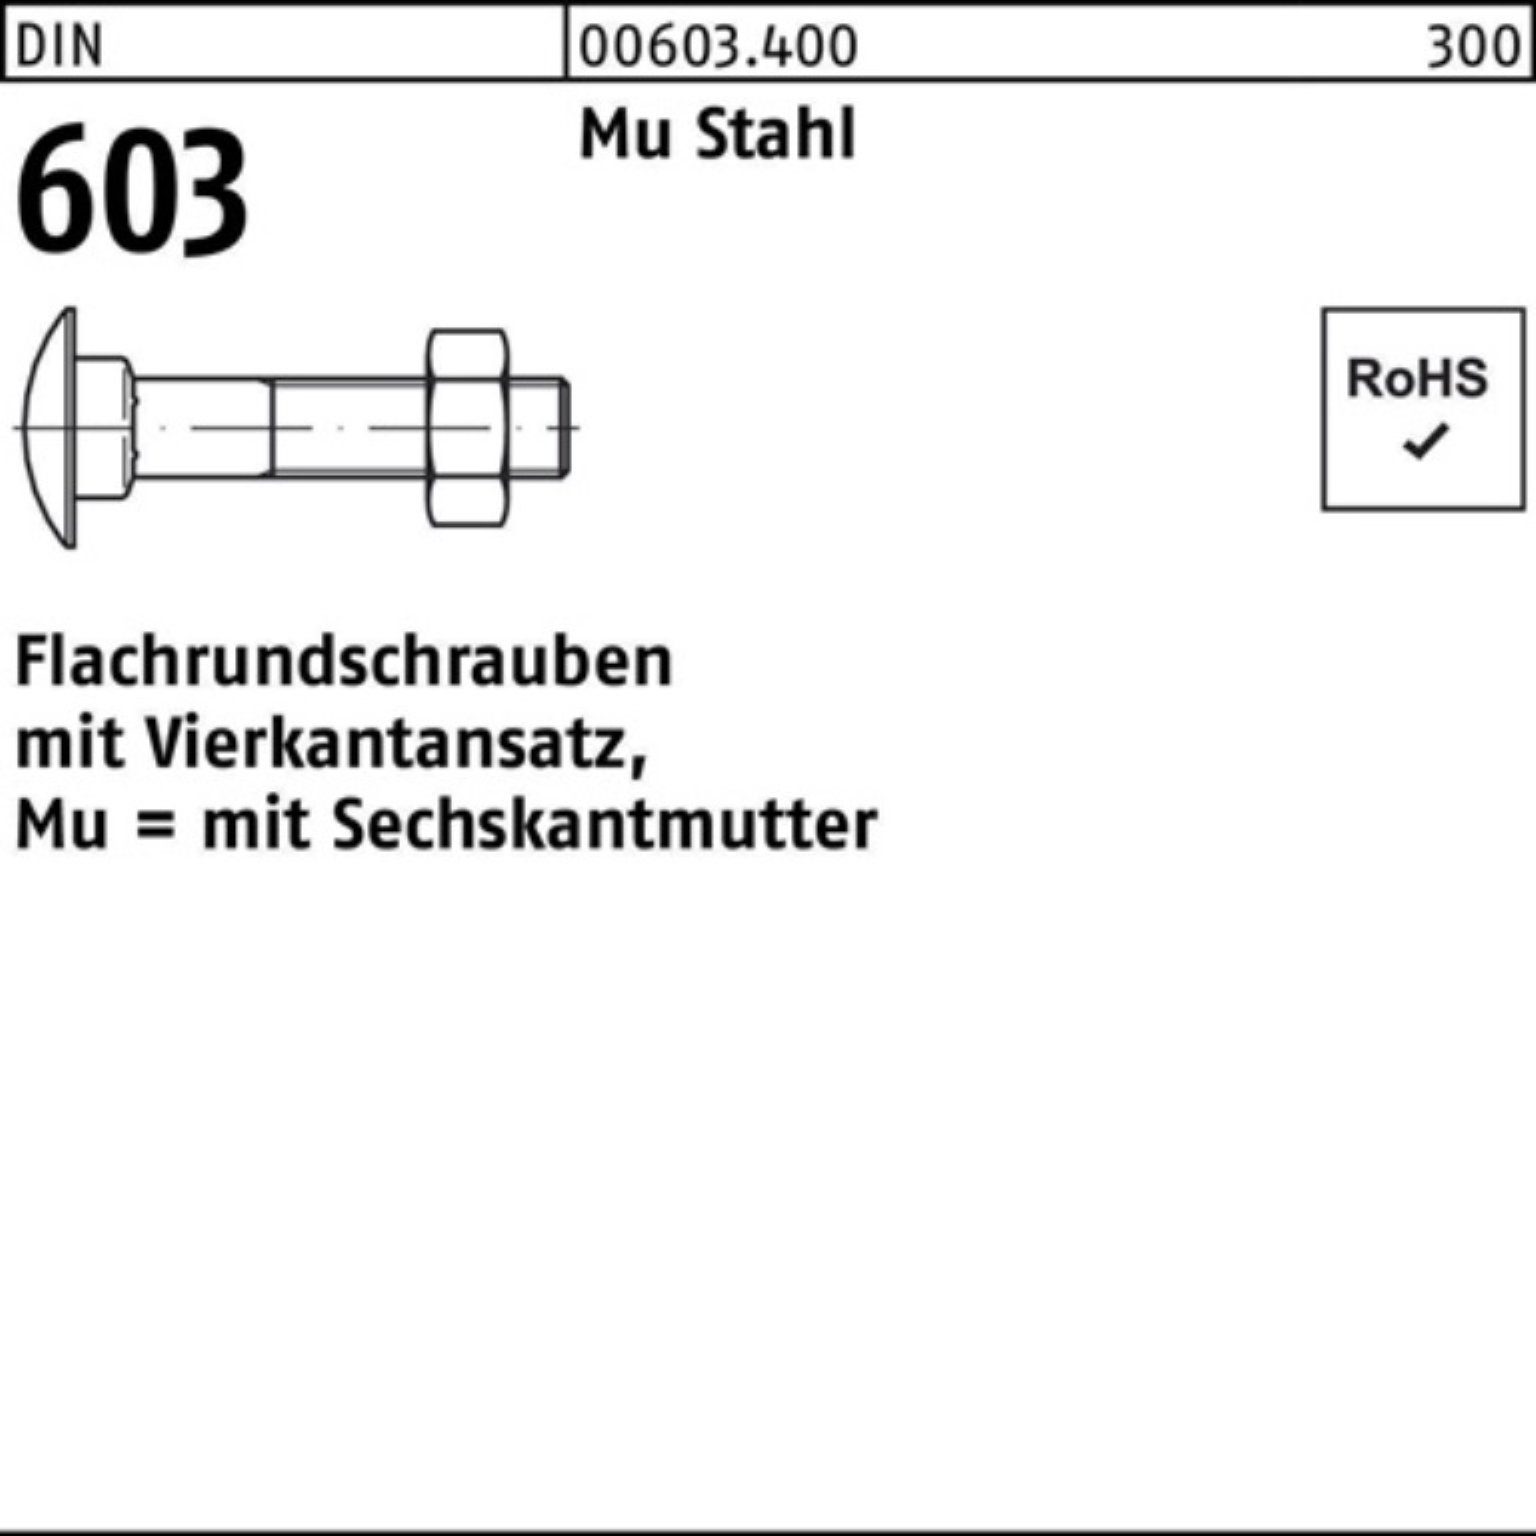 Reyher Schraube 100er 603 M8x90 DIN Flachrundschraube Pack M Vierkantansatz/6-ktmutter